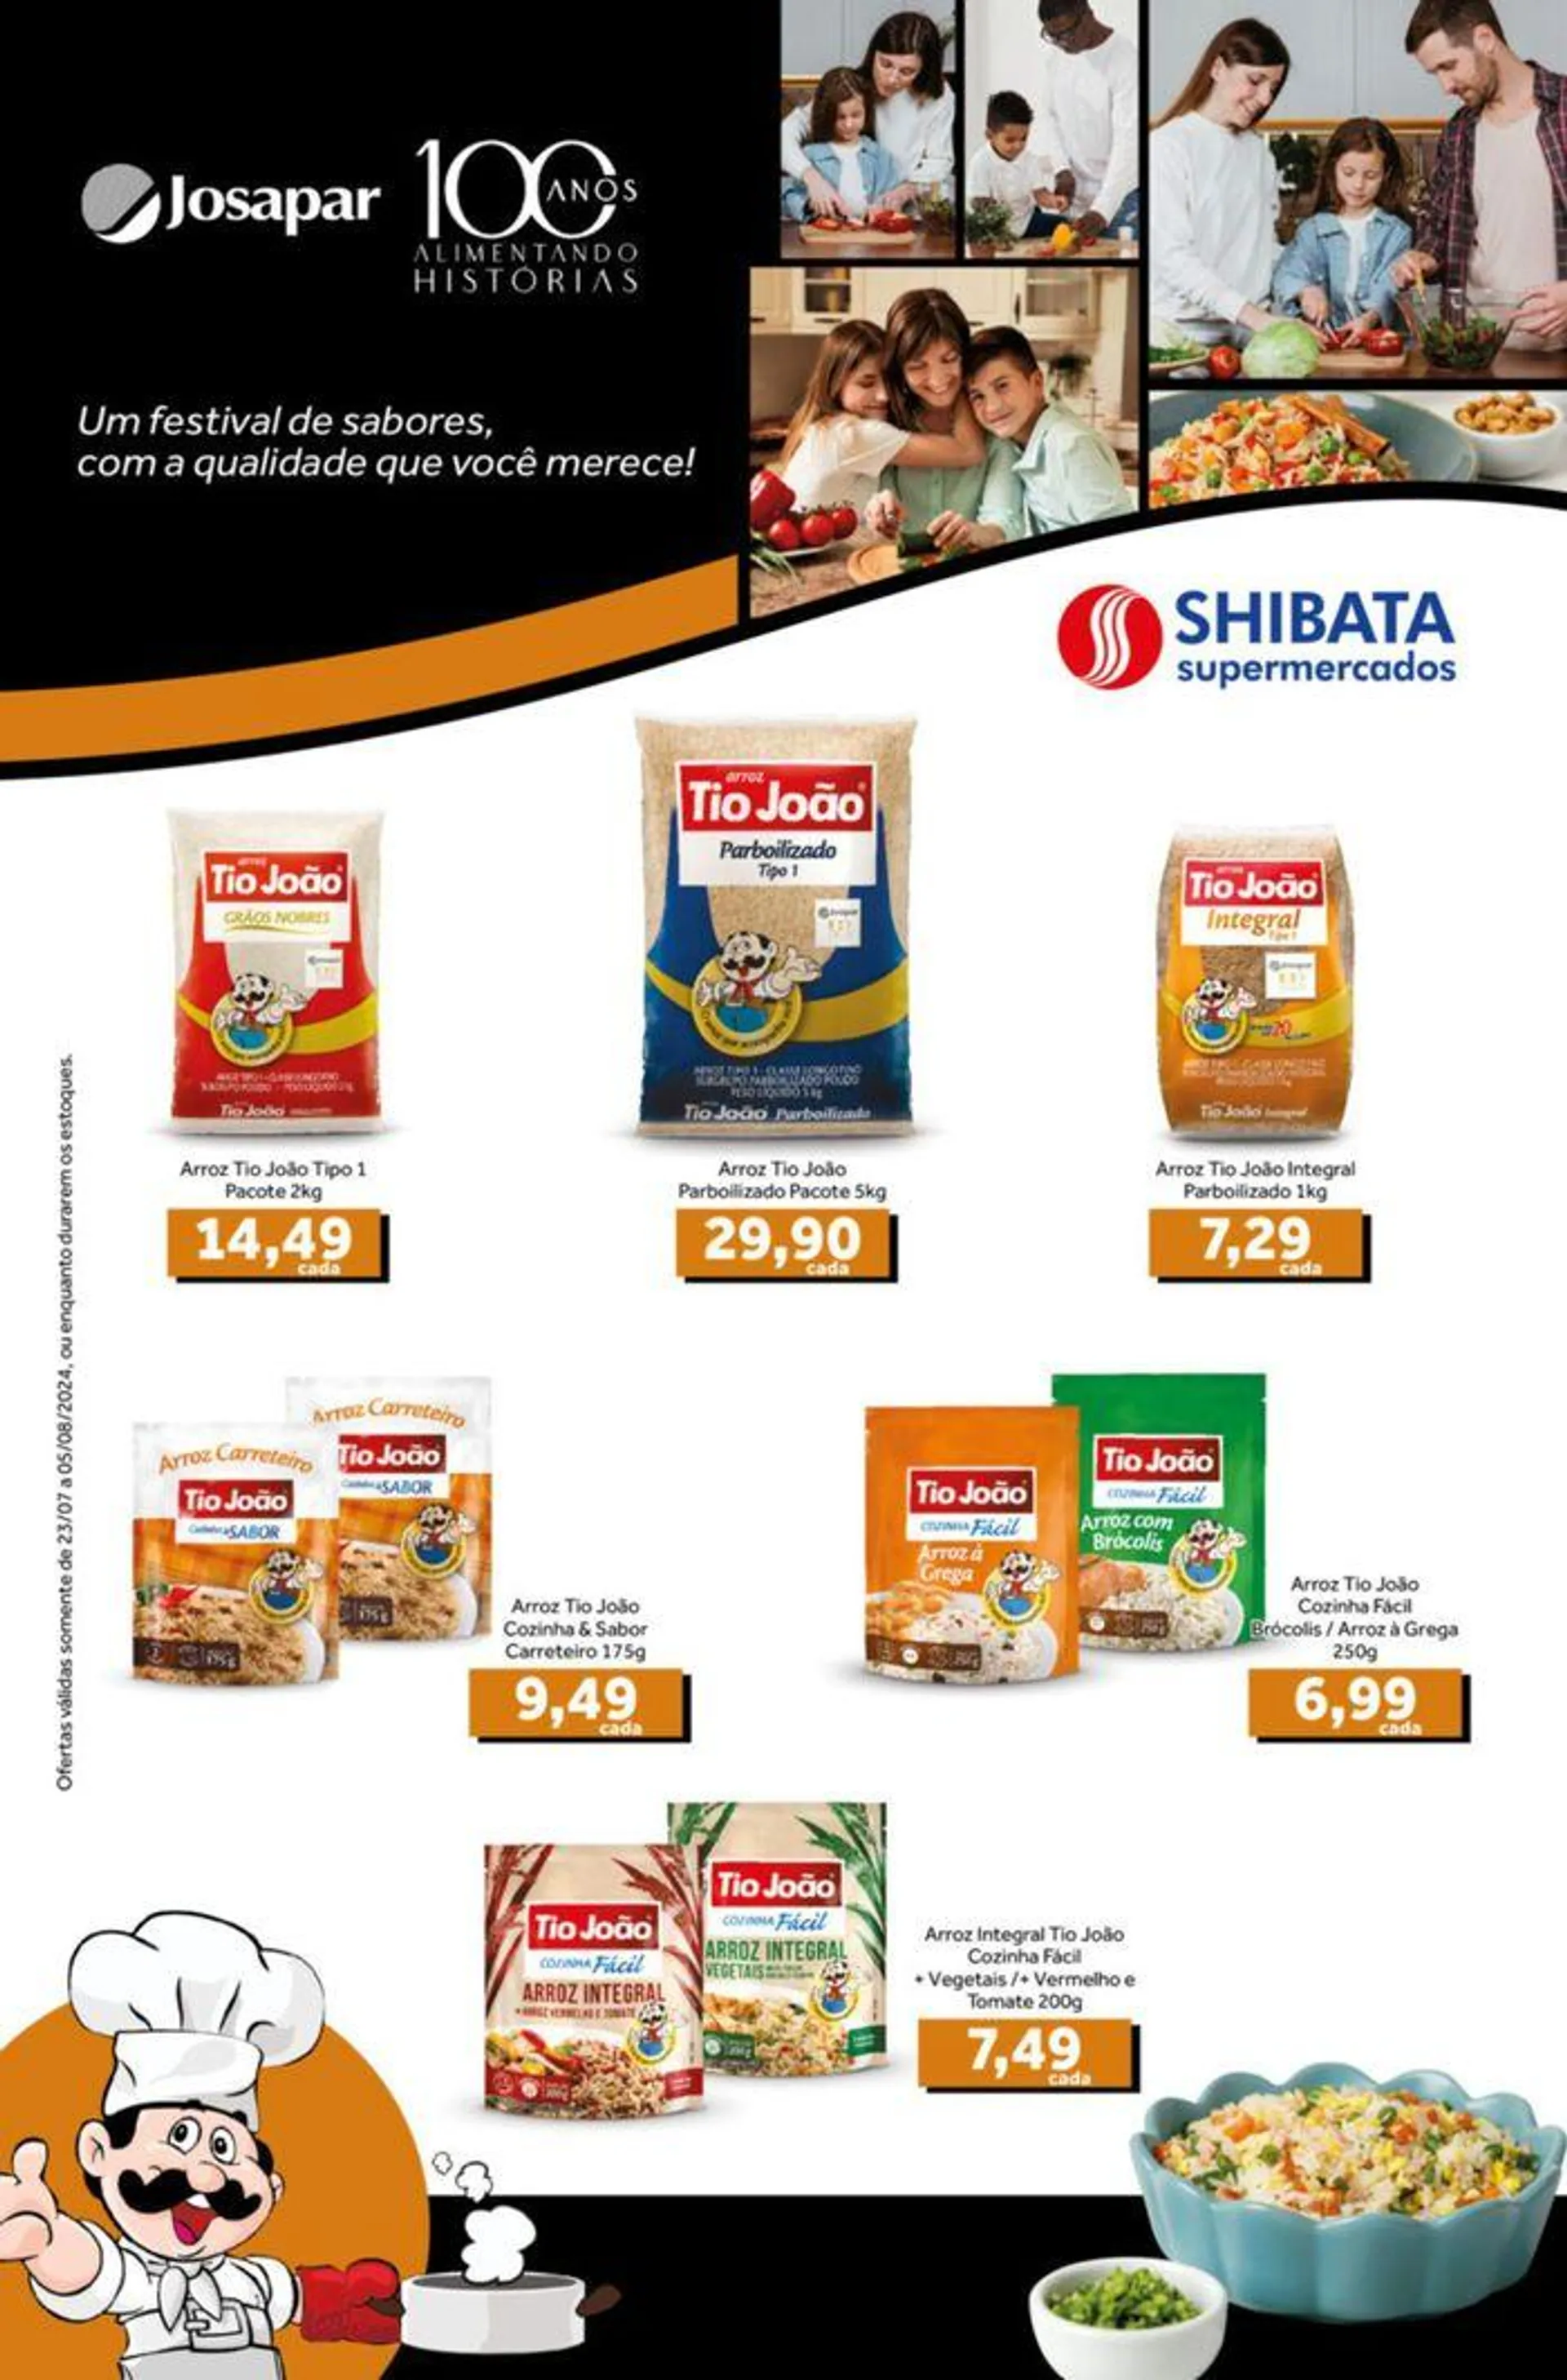 Oferta Shibata Supermercados - 1